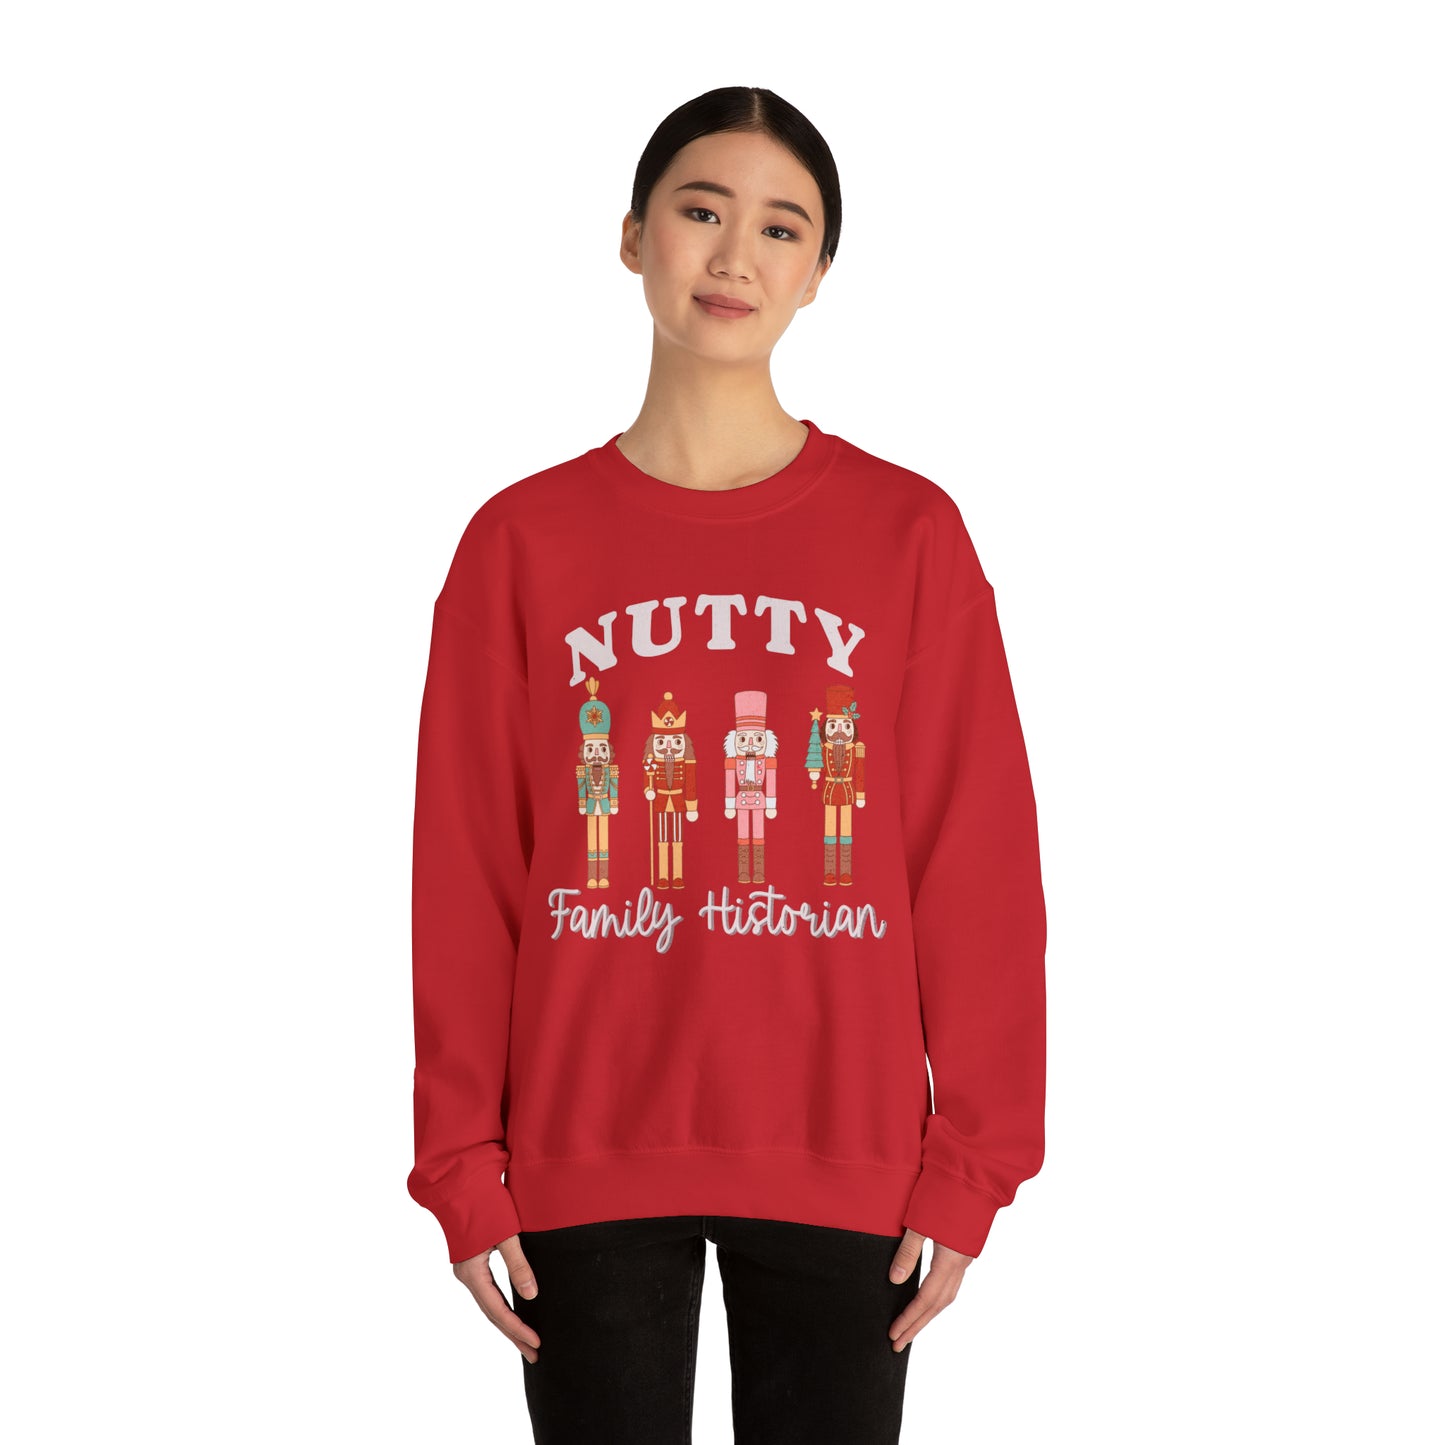 Nutty Family Historian Crewneck Sweatshirt